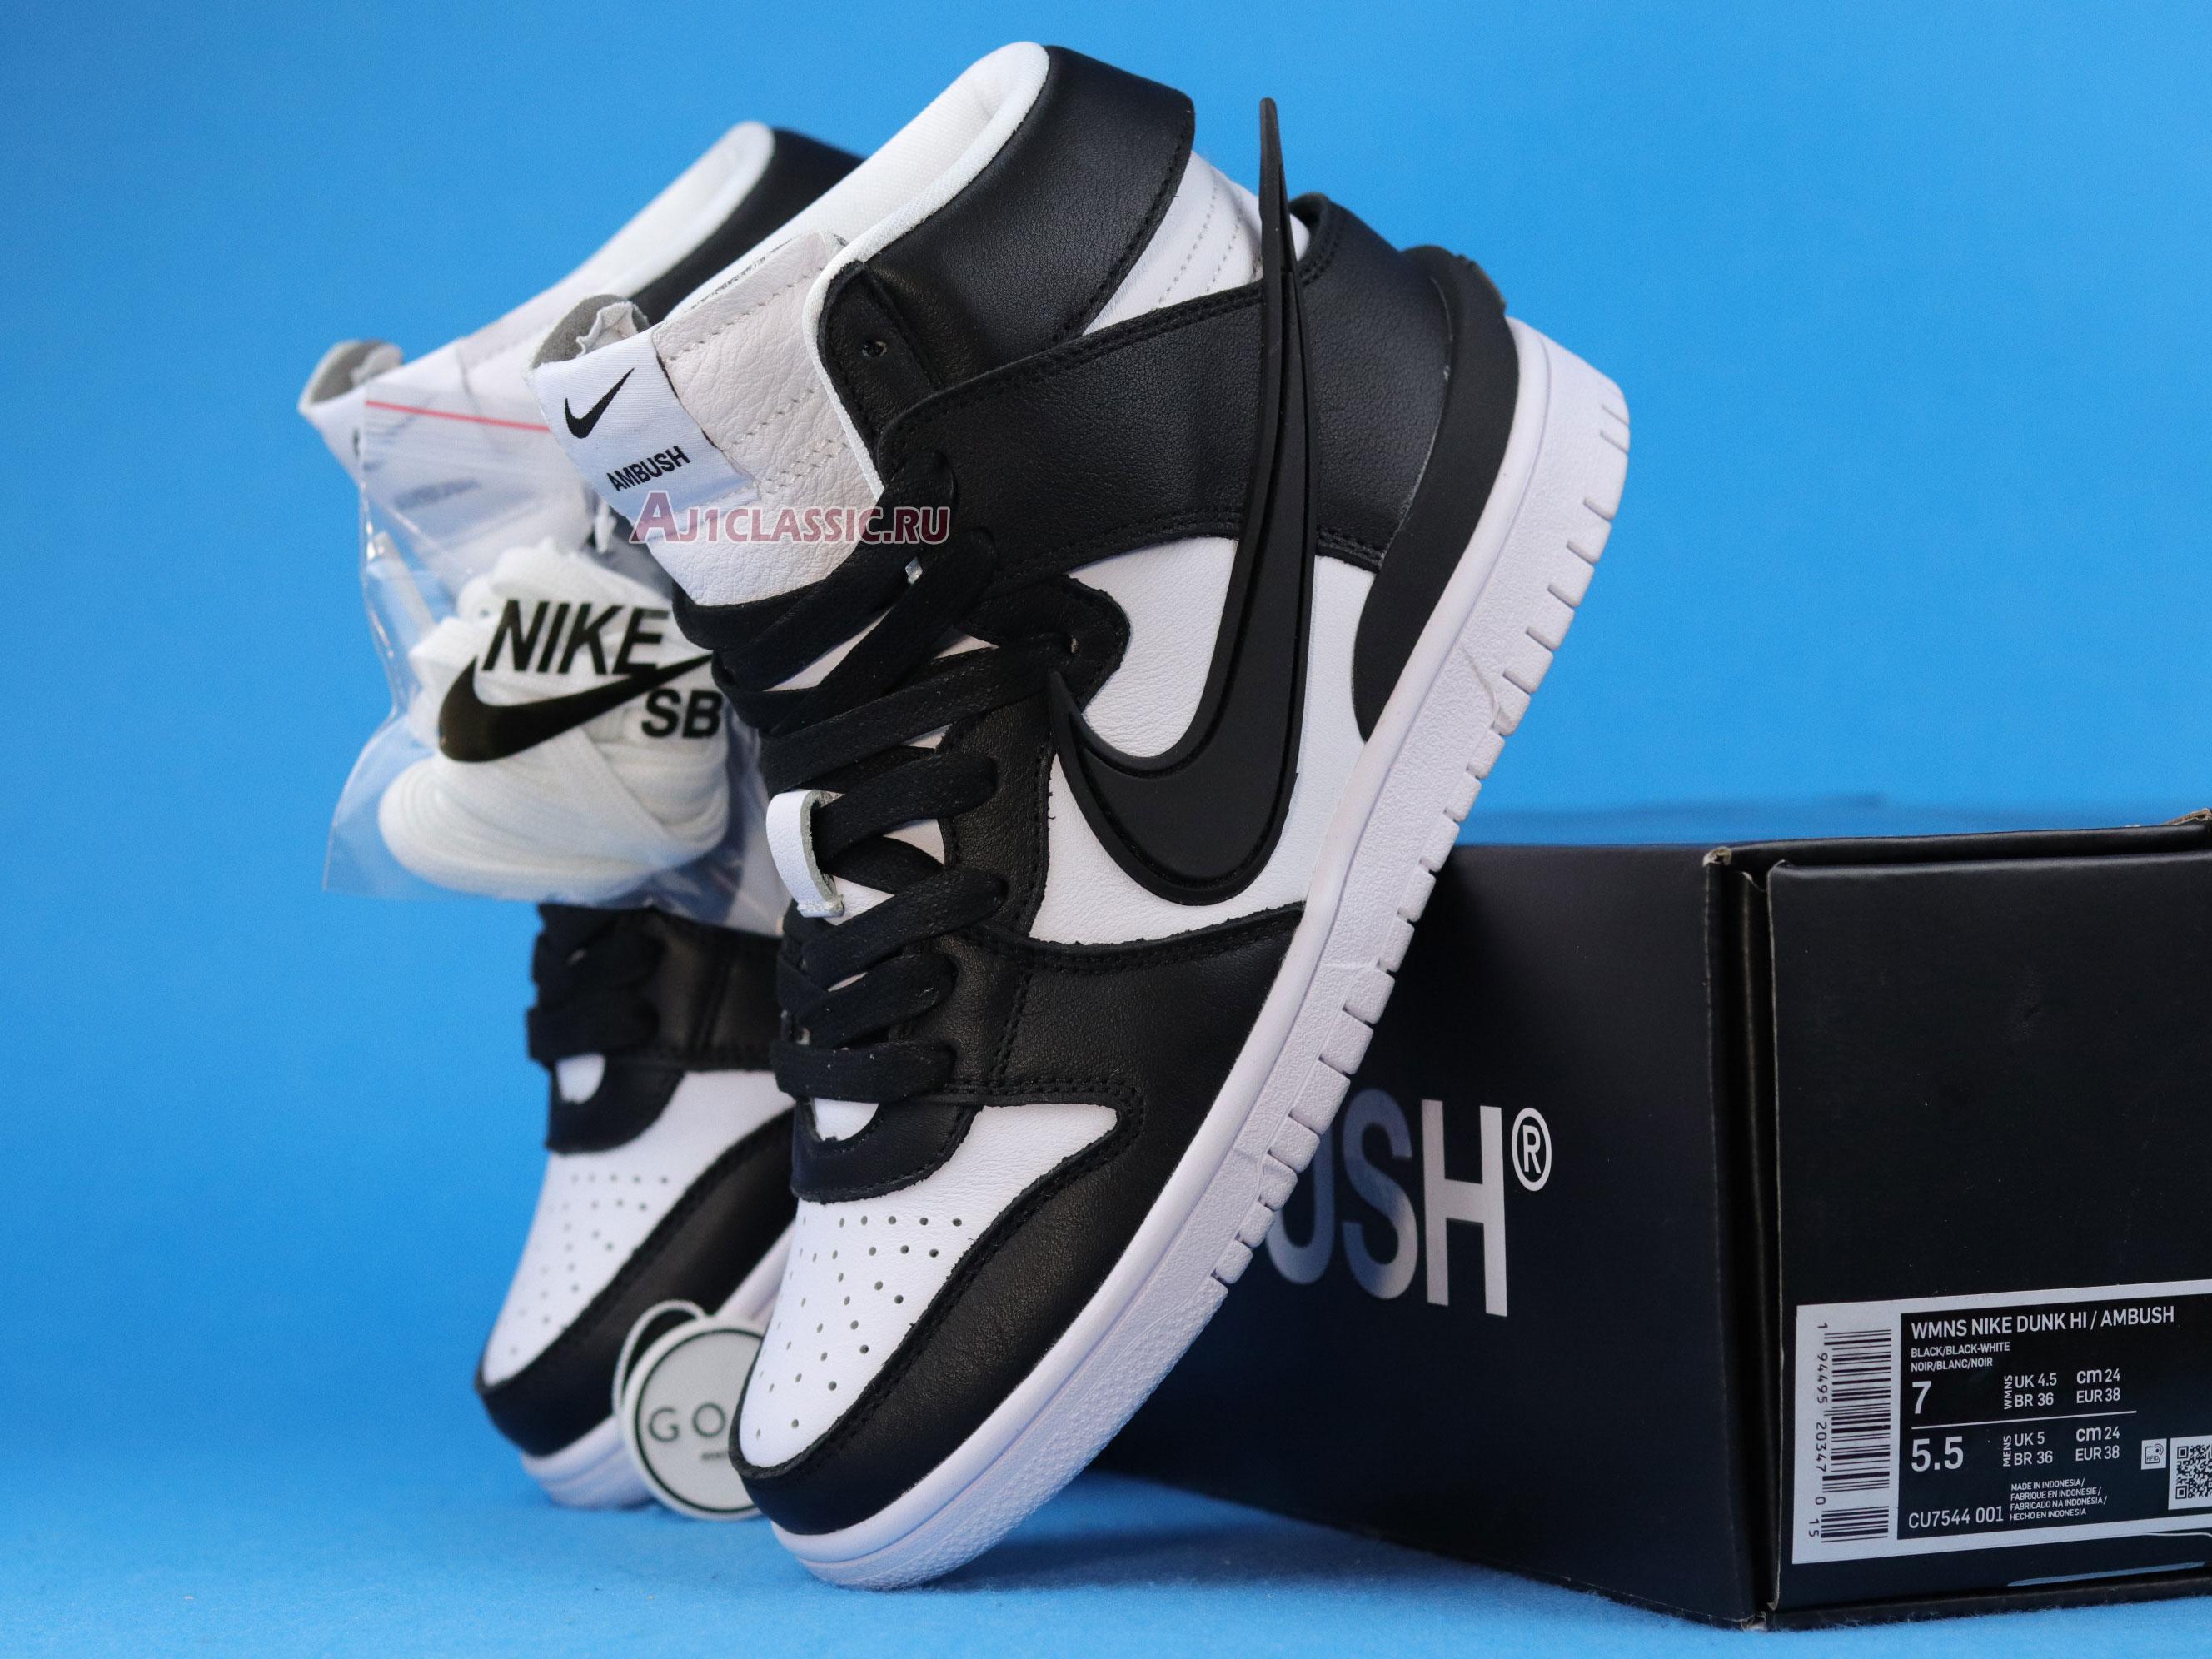 AMBUSH x Nike Dunk High Black CU7544-001 White/Black/Spruce Aura Sneakers